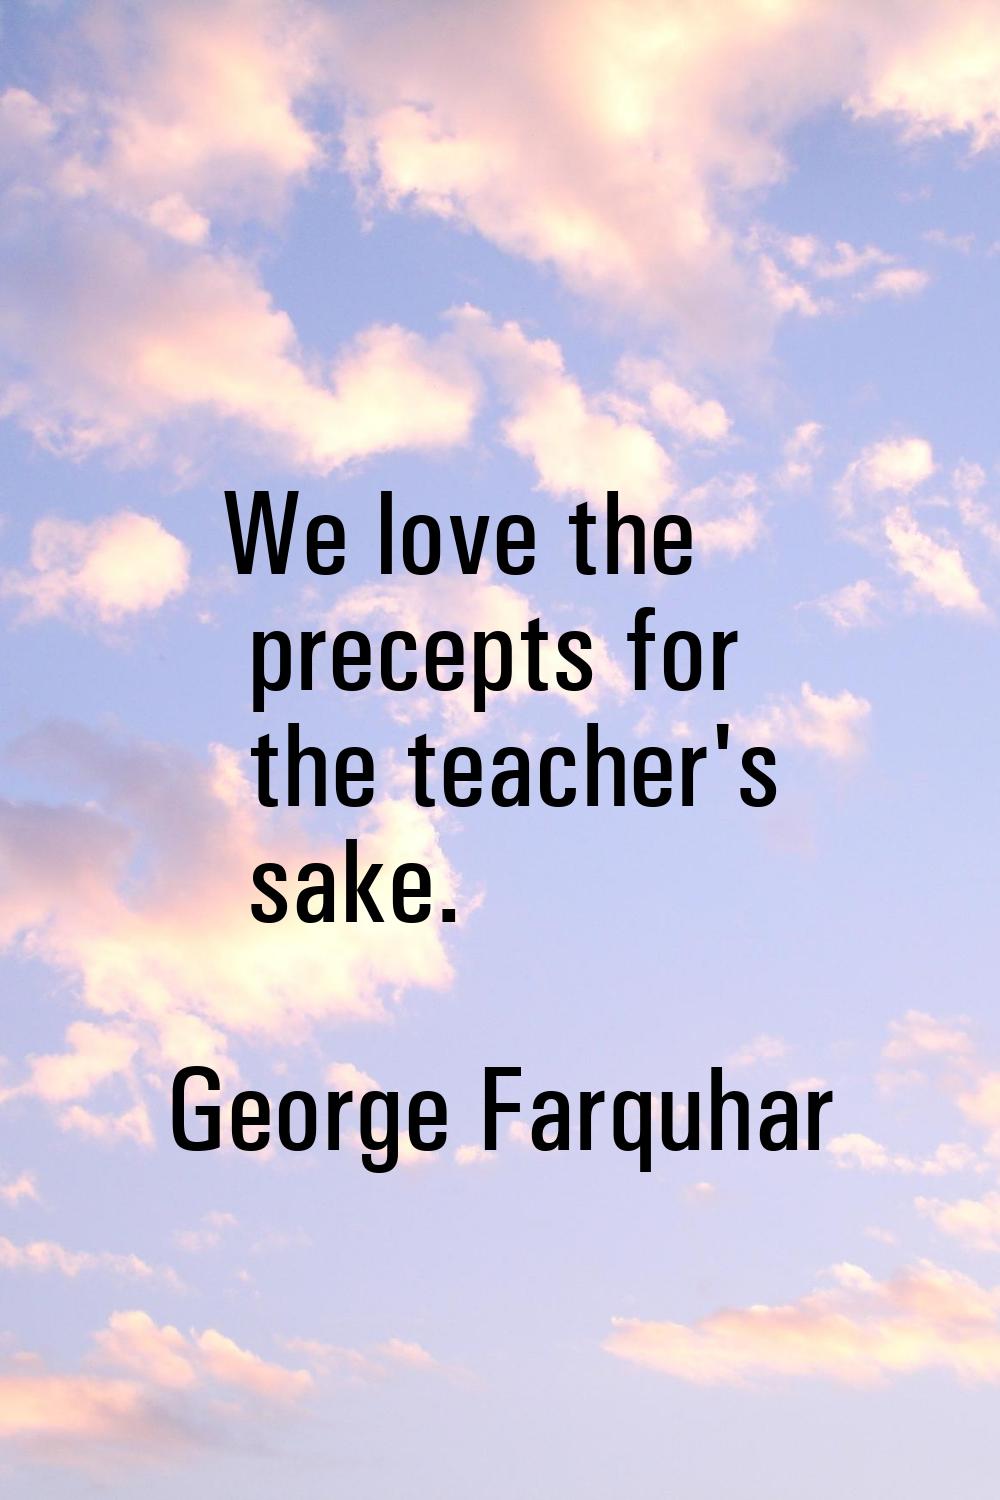 We love the precepts for the teacher's sake.